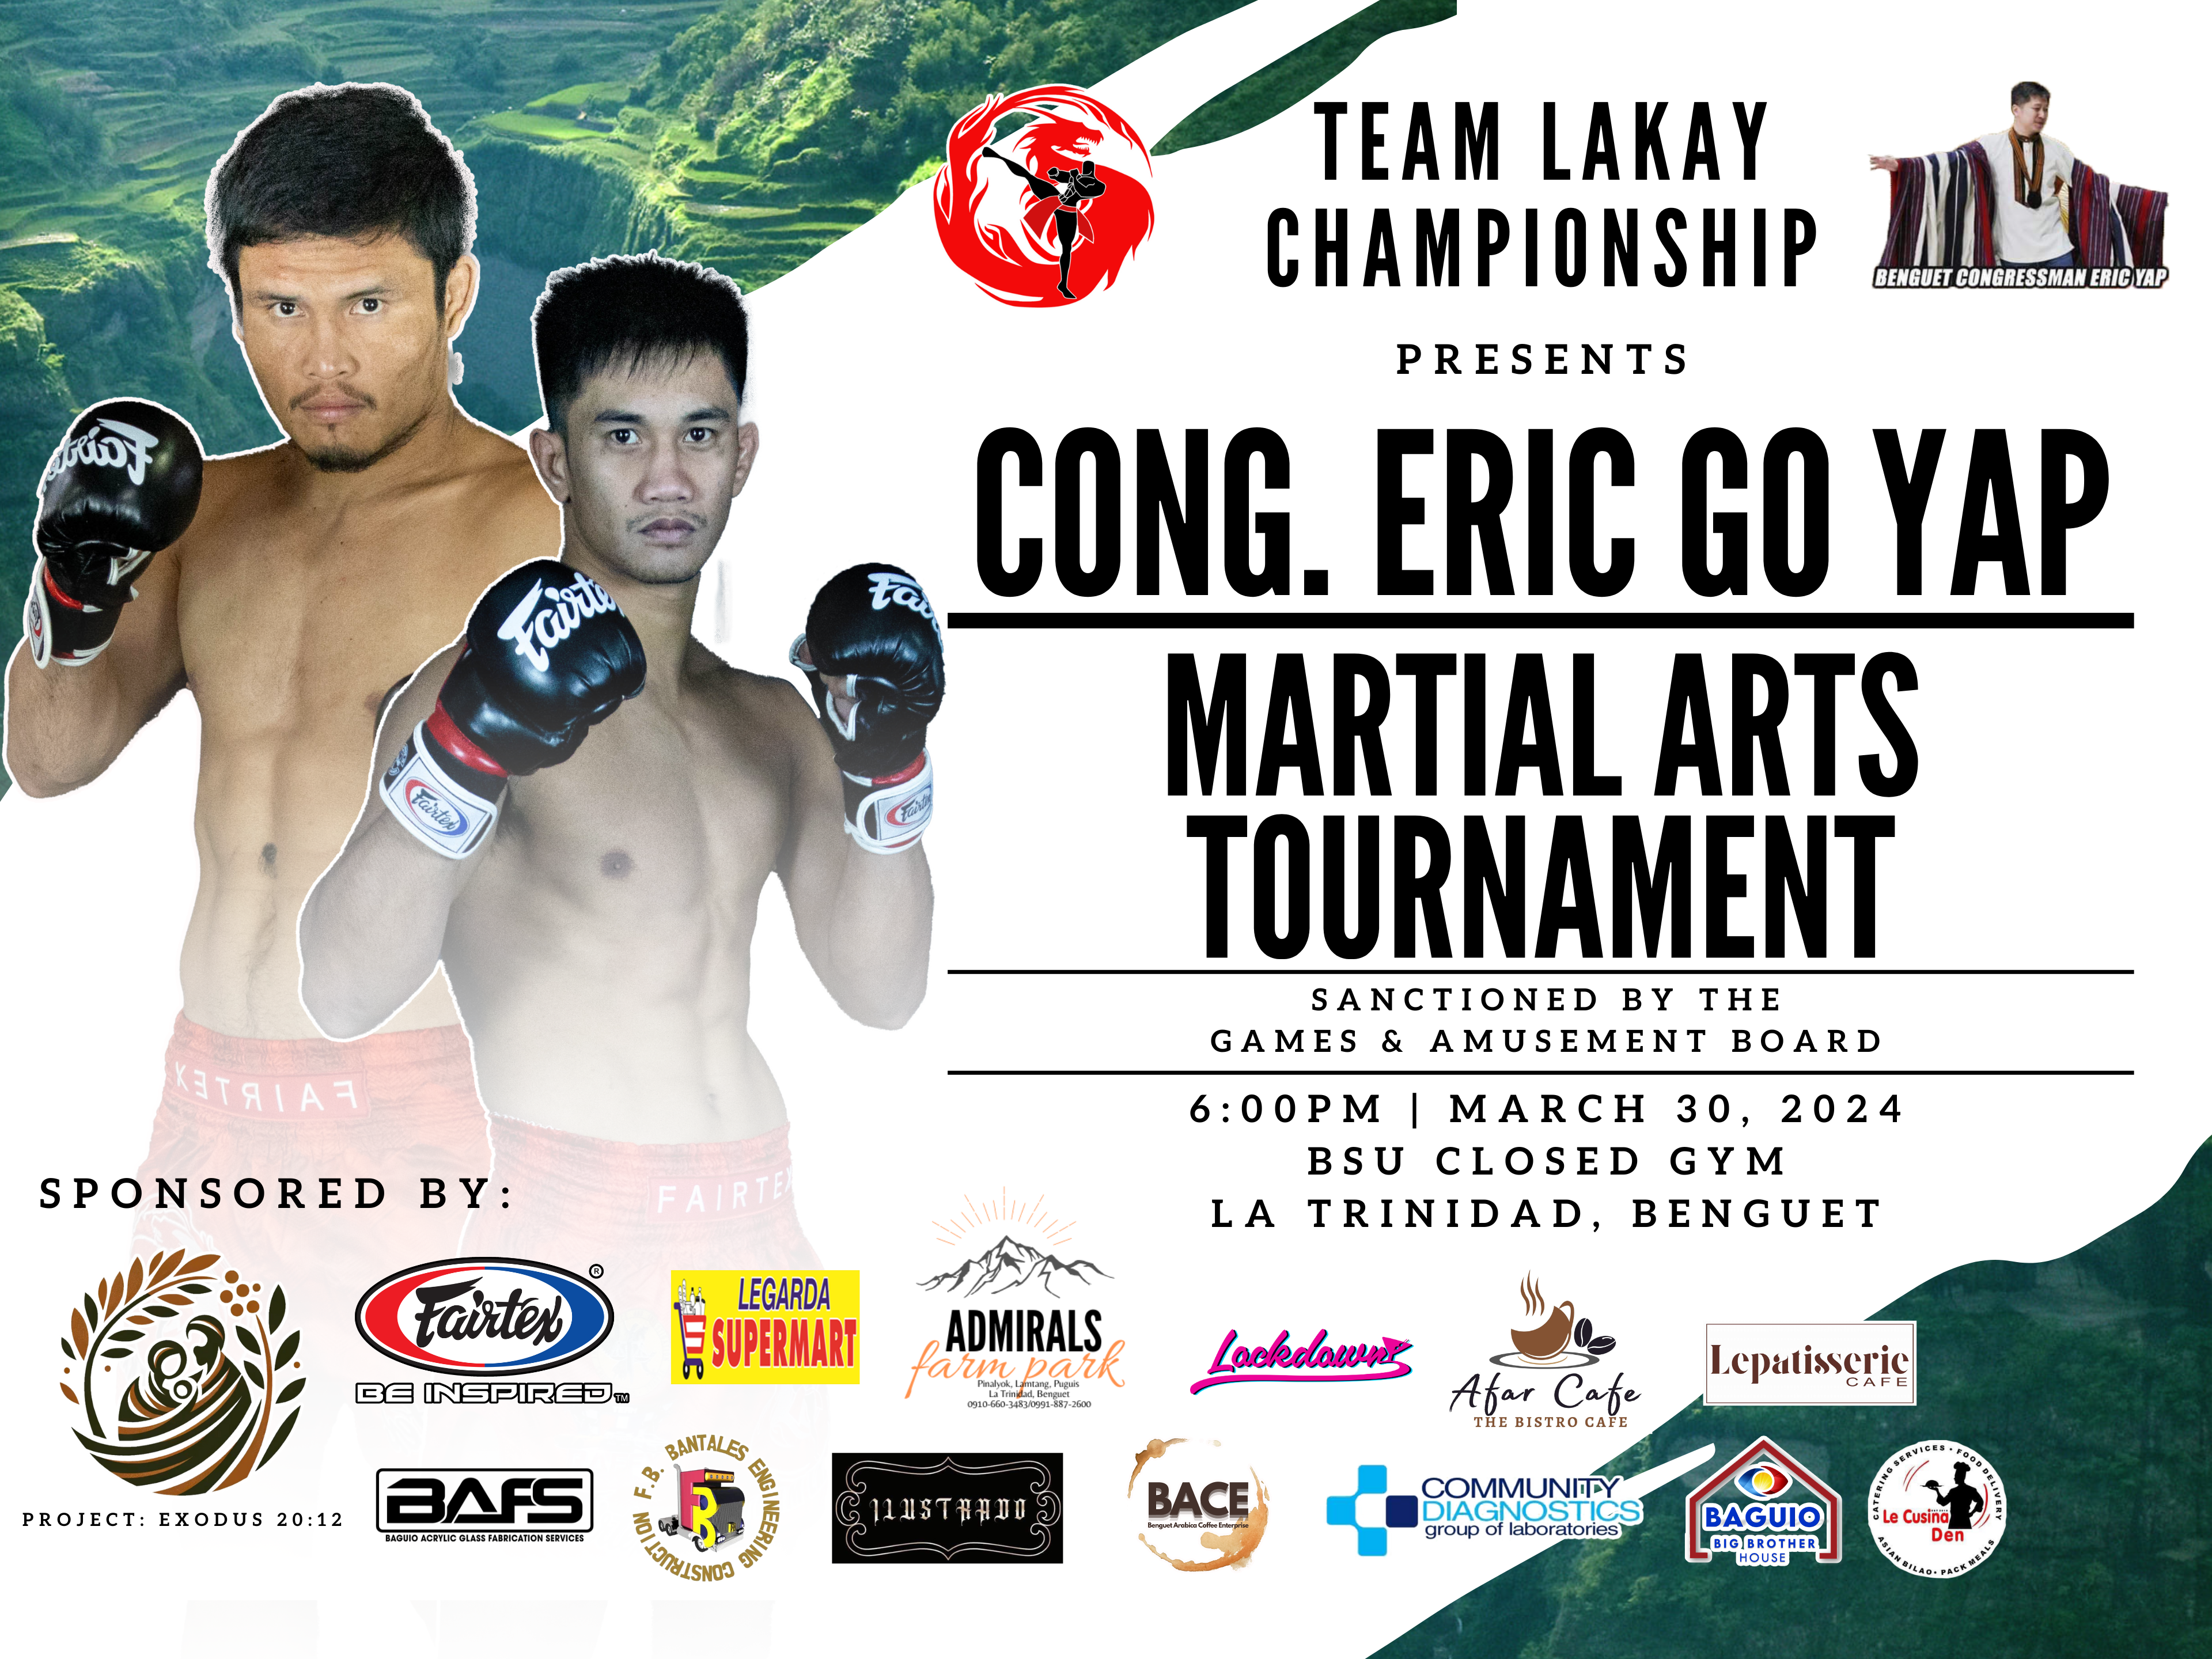 Cong. Eric Yap Martial Arts Tourney set March 30